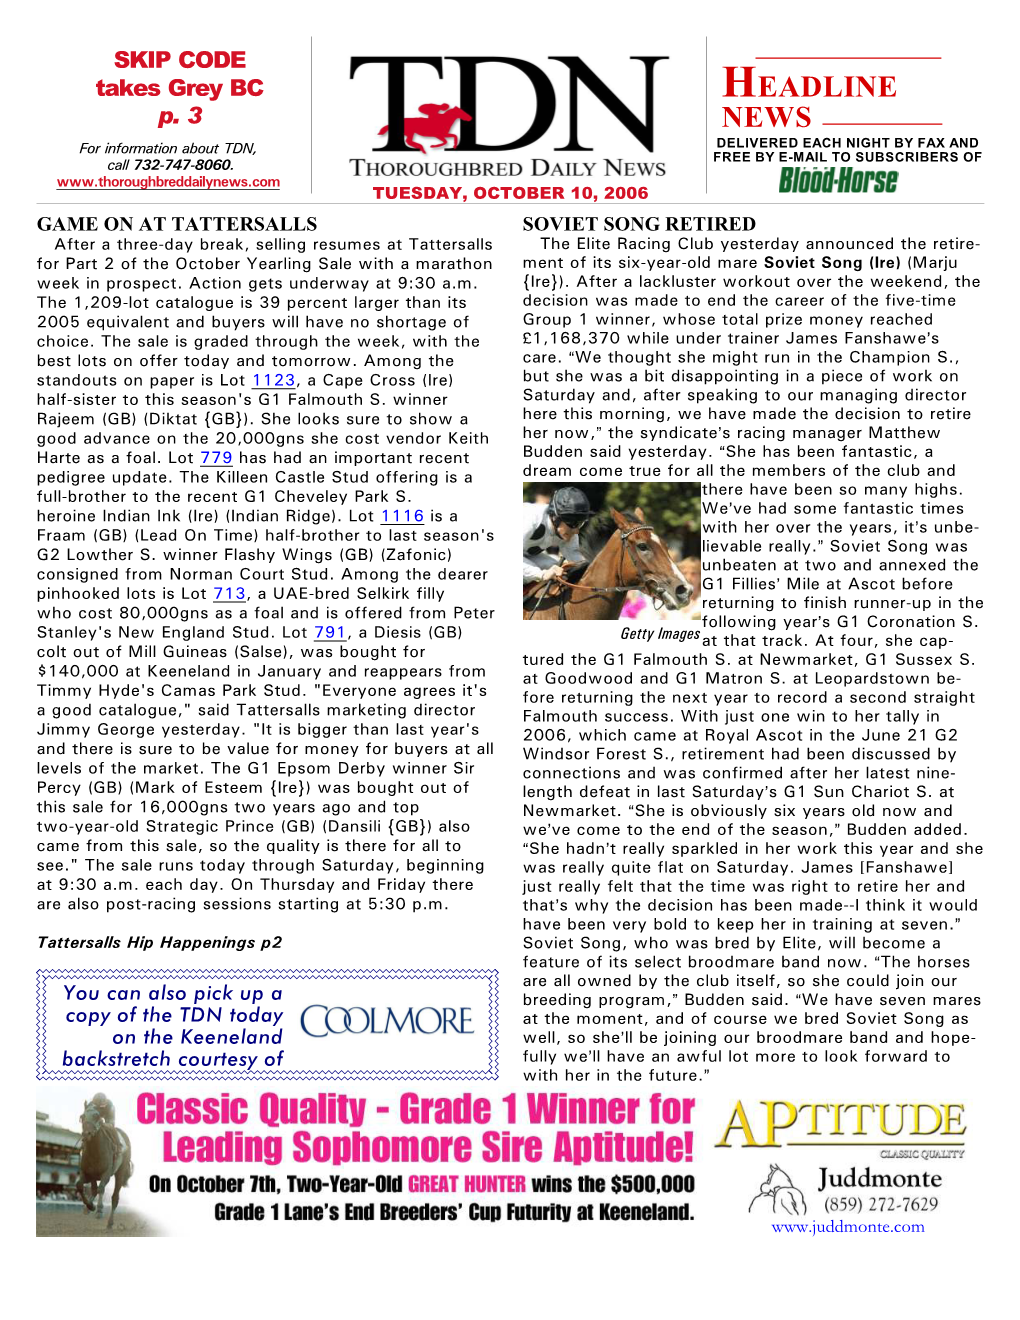 HEADLINE NEWS • 10/10/06 • PAGE 2 of 5